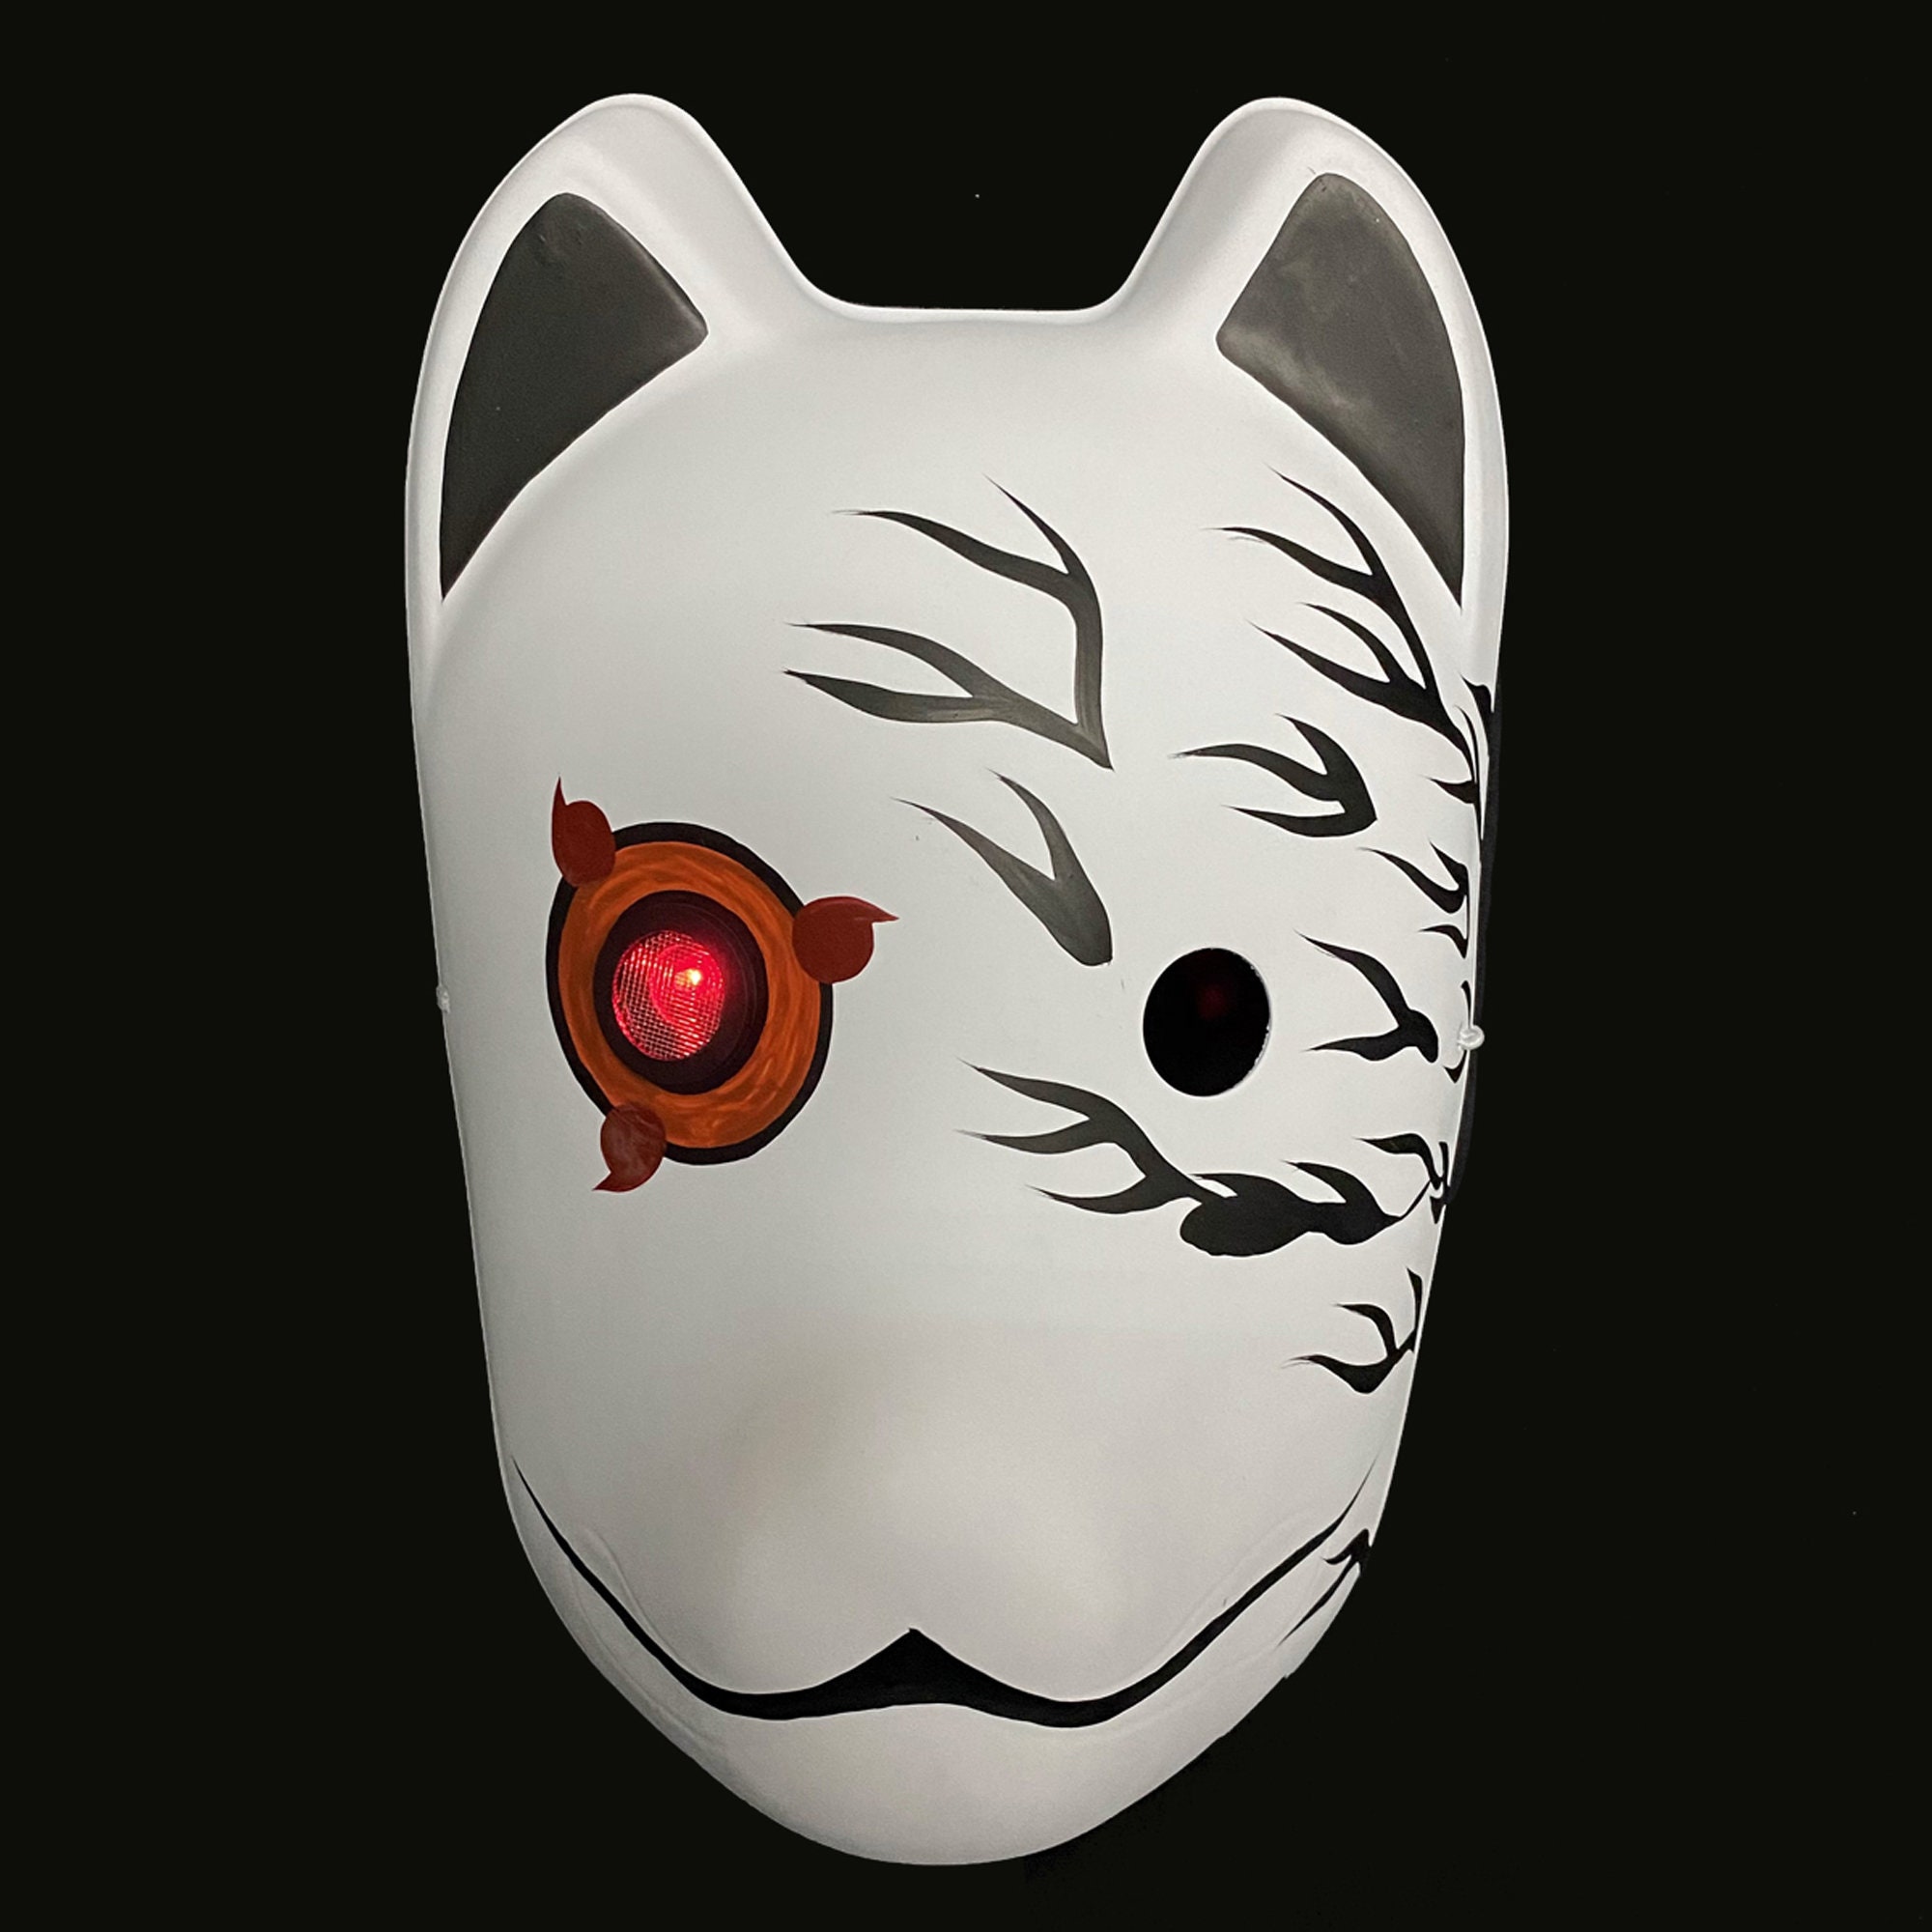 Kitsune Demon Fox Mask Mascara de Zorro Kitsune 10